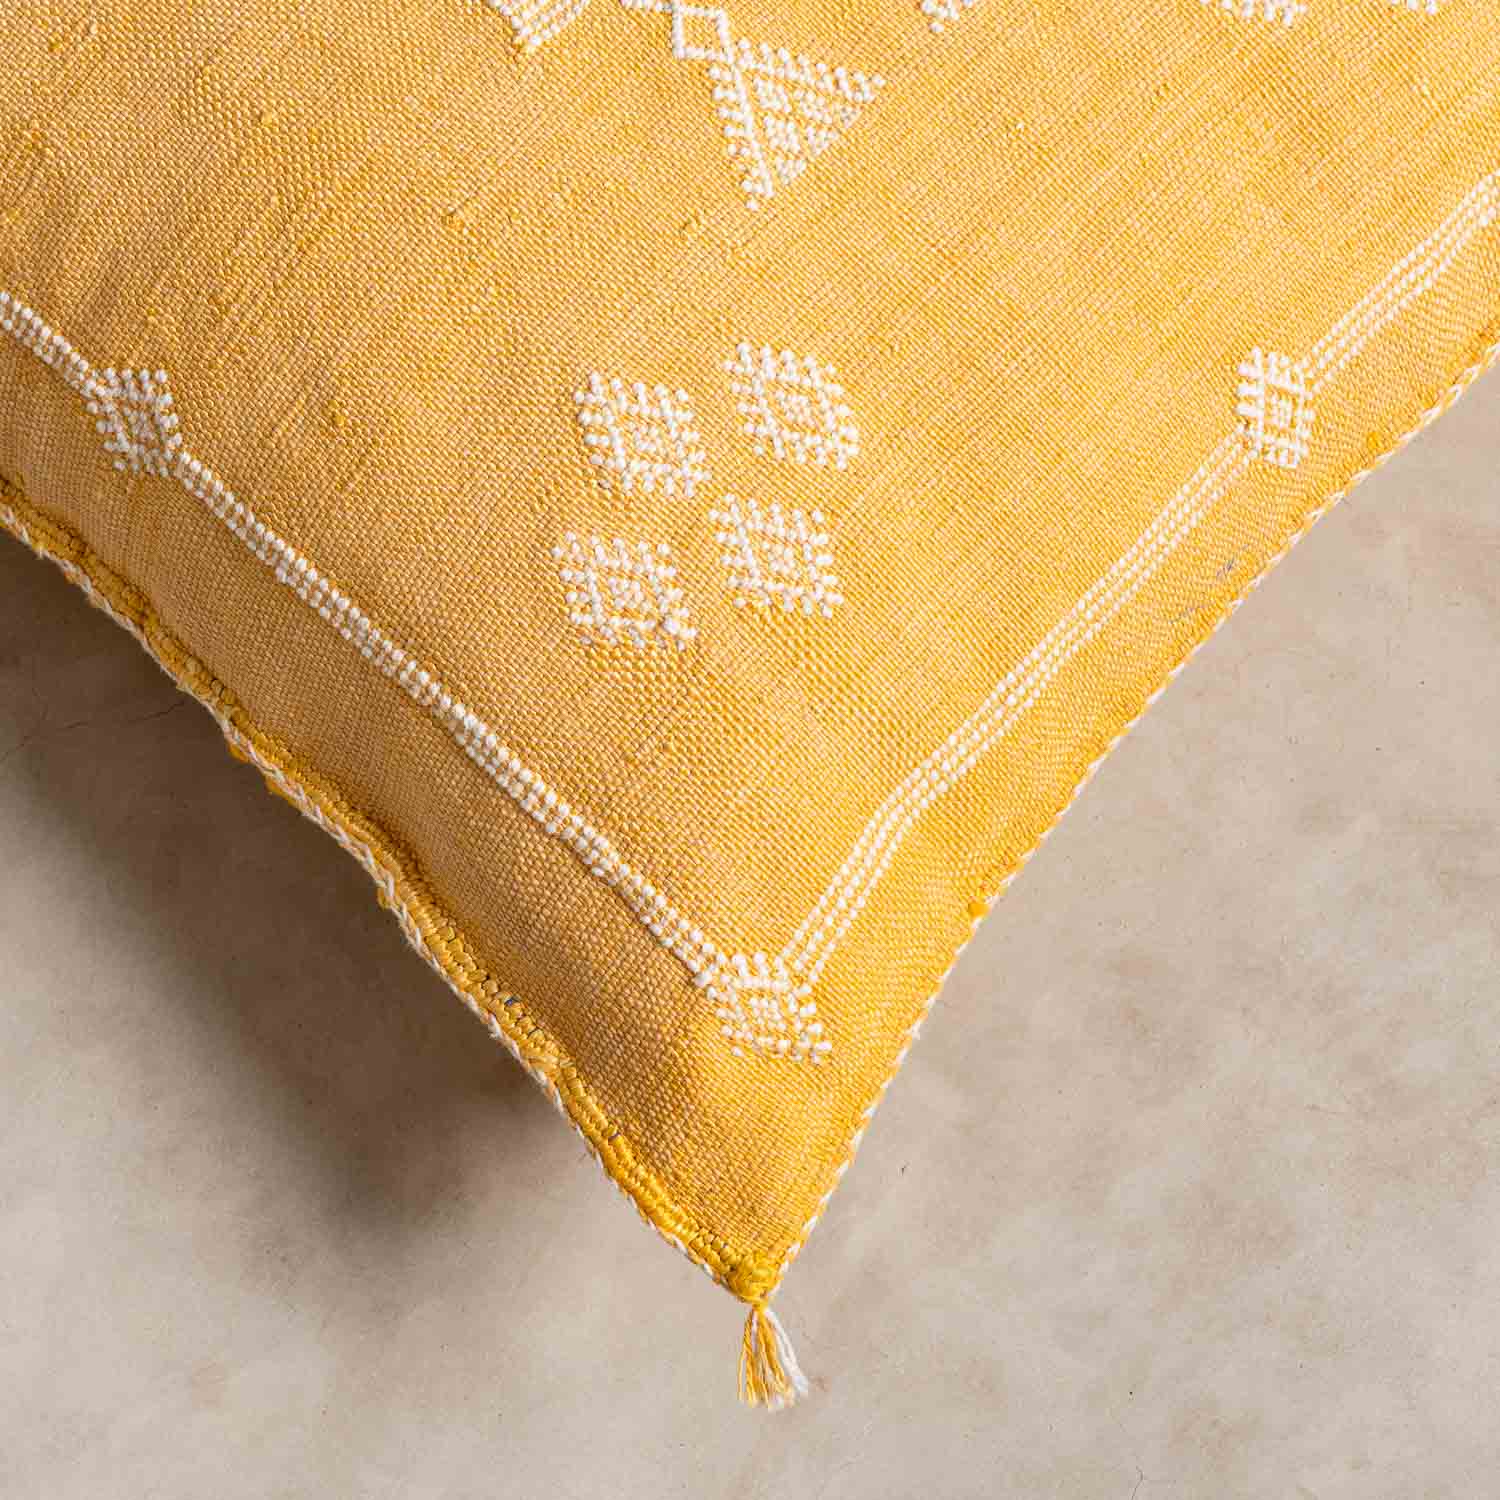 Yellow Cactus silk pillow cover